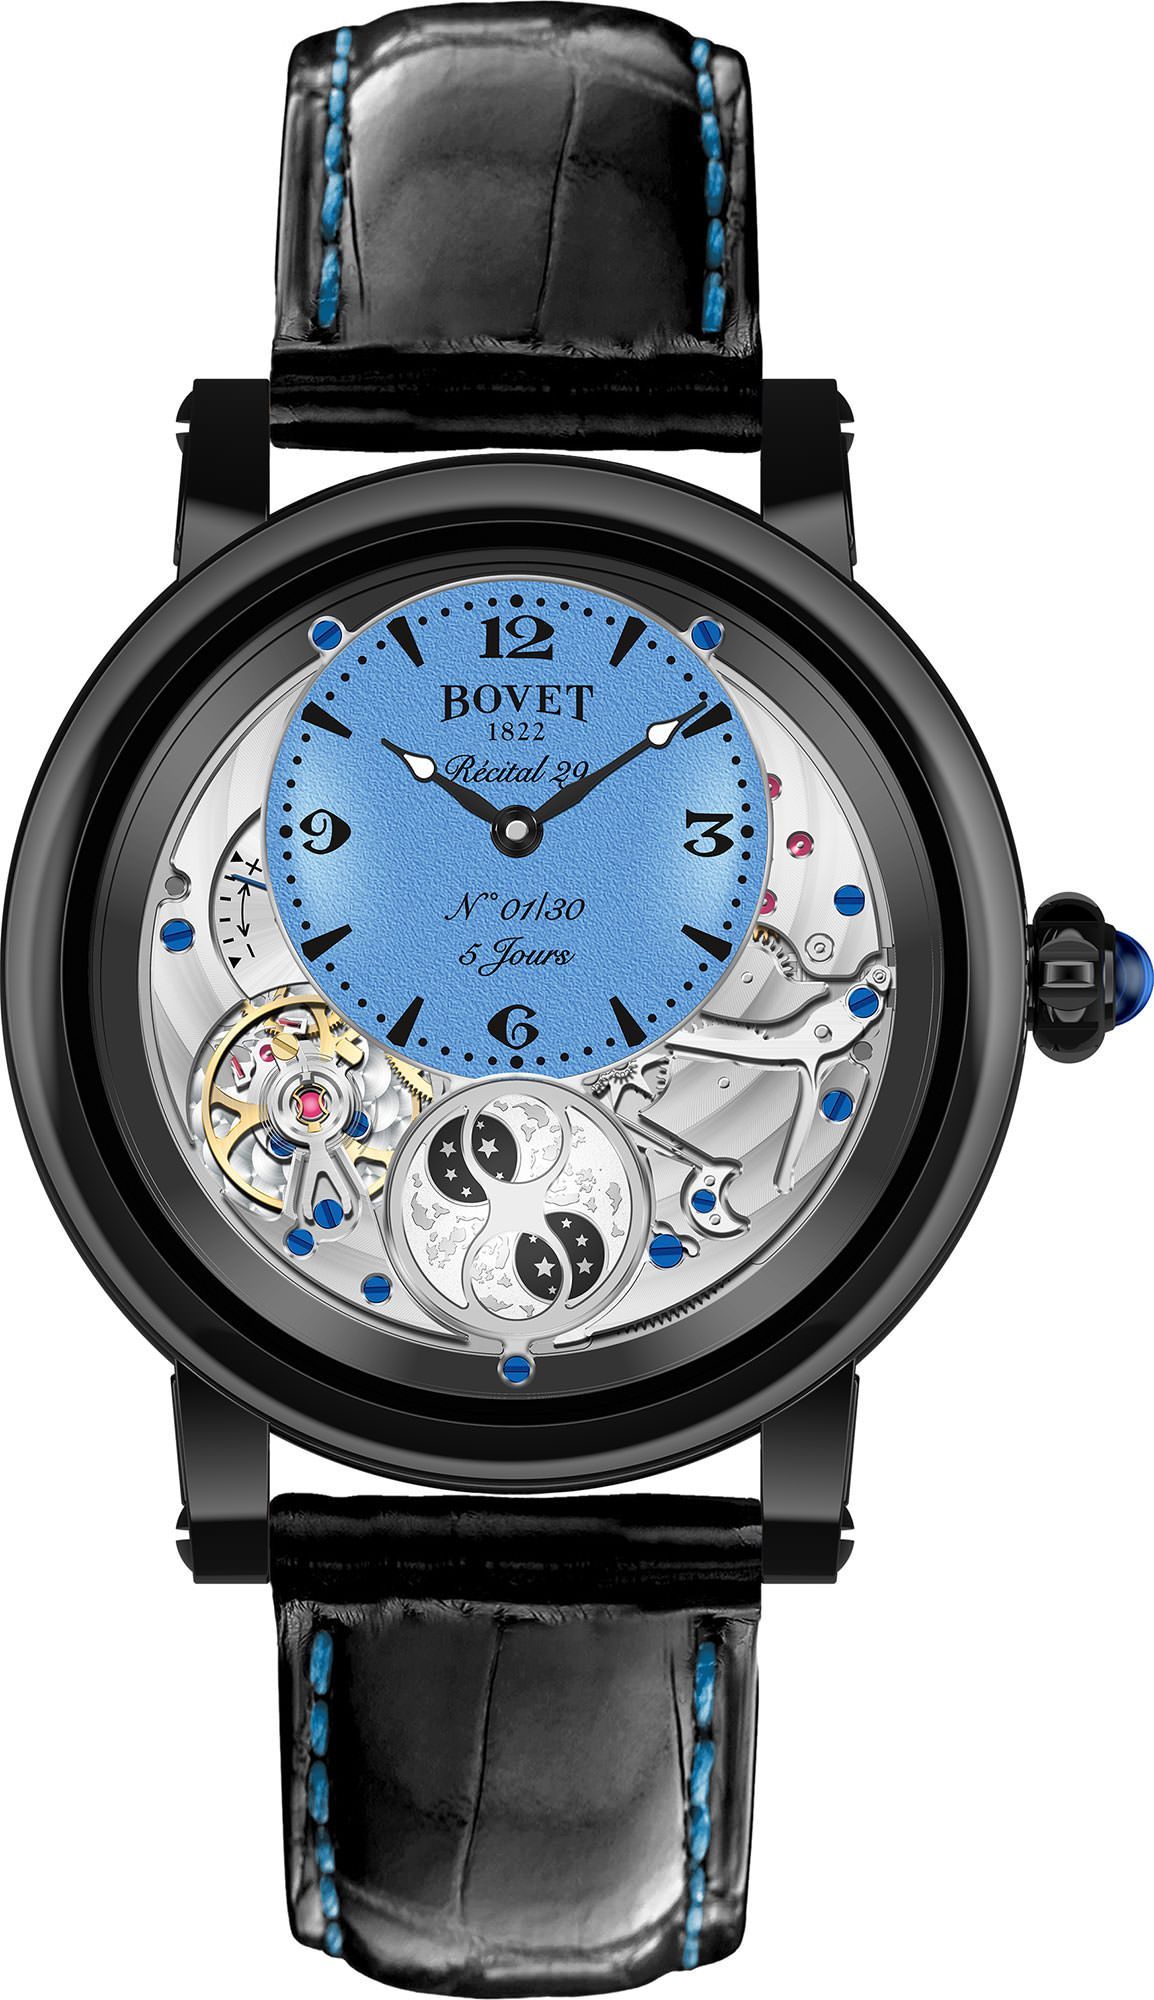 Bovet Récital 29 42 mm Watch in Blue Dial For Men - 1